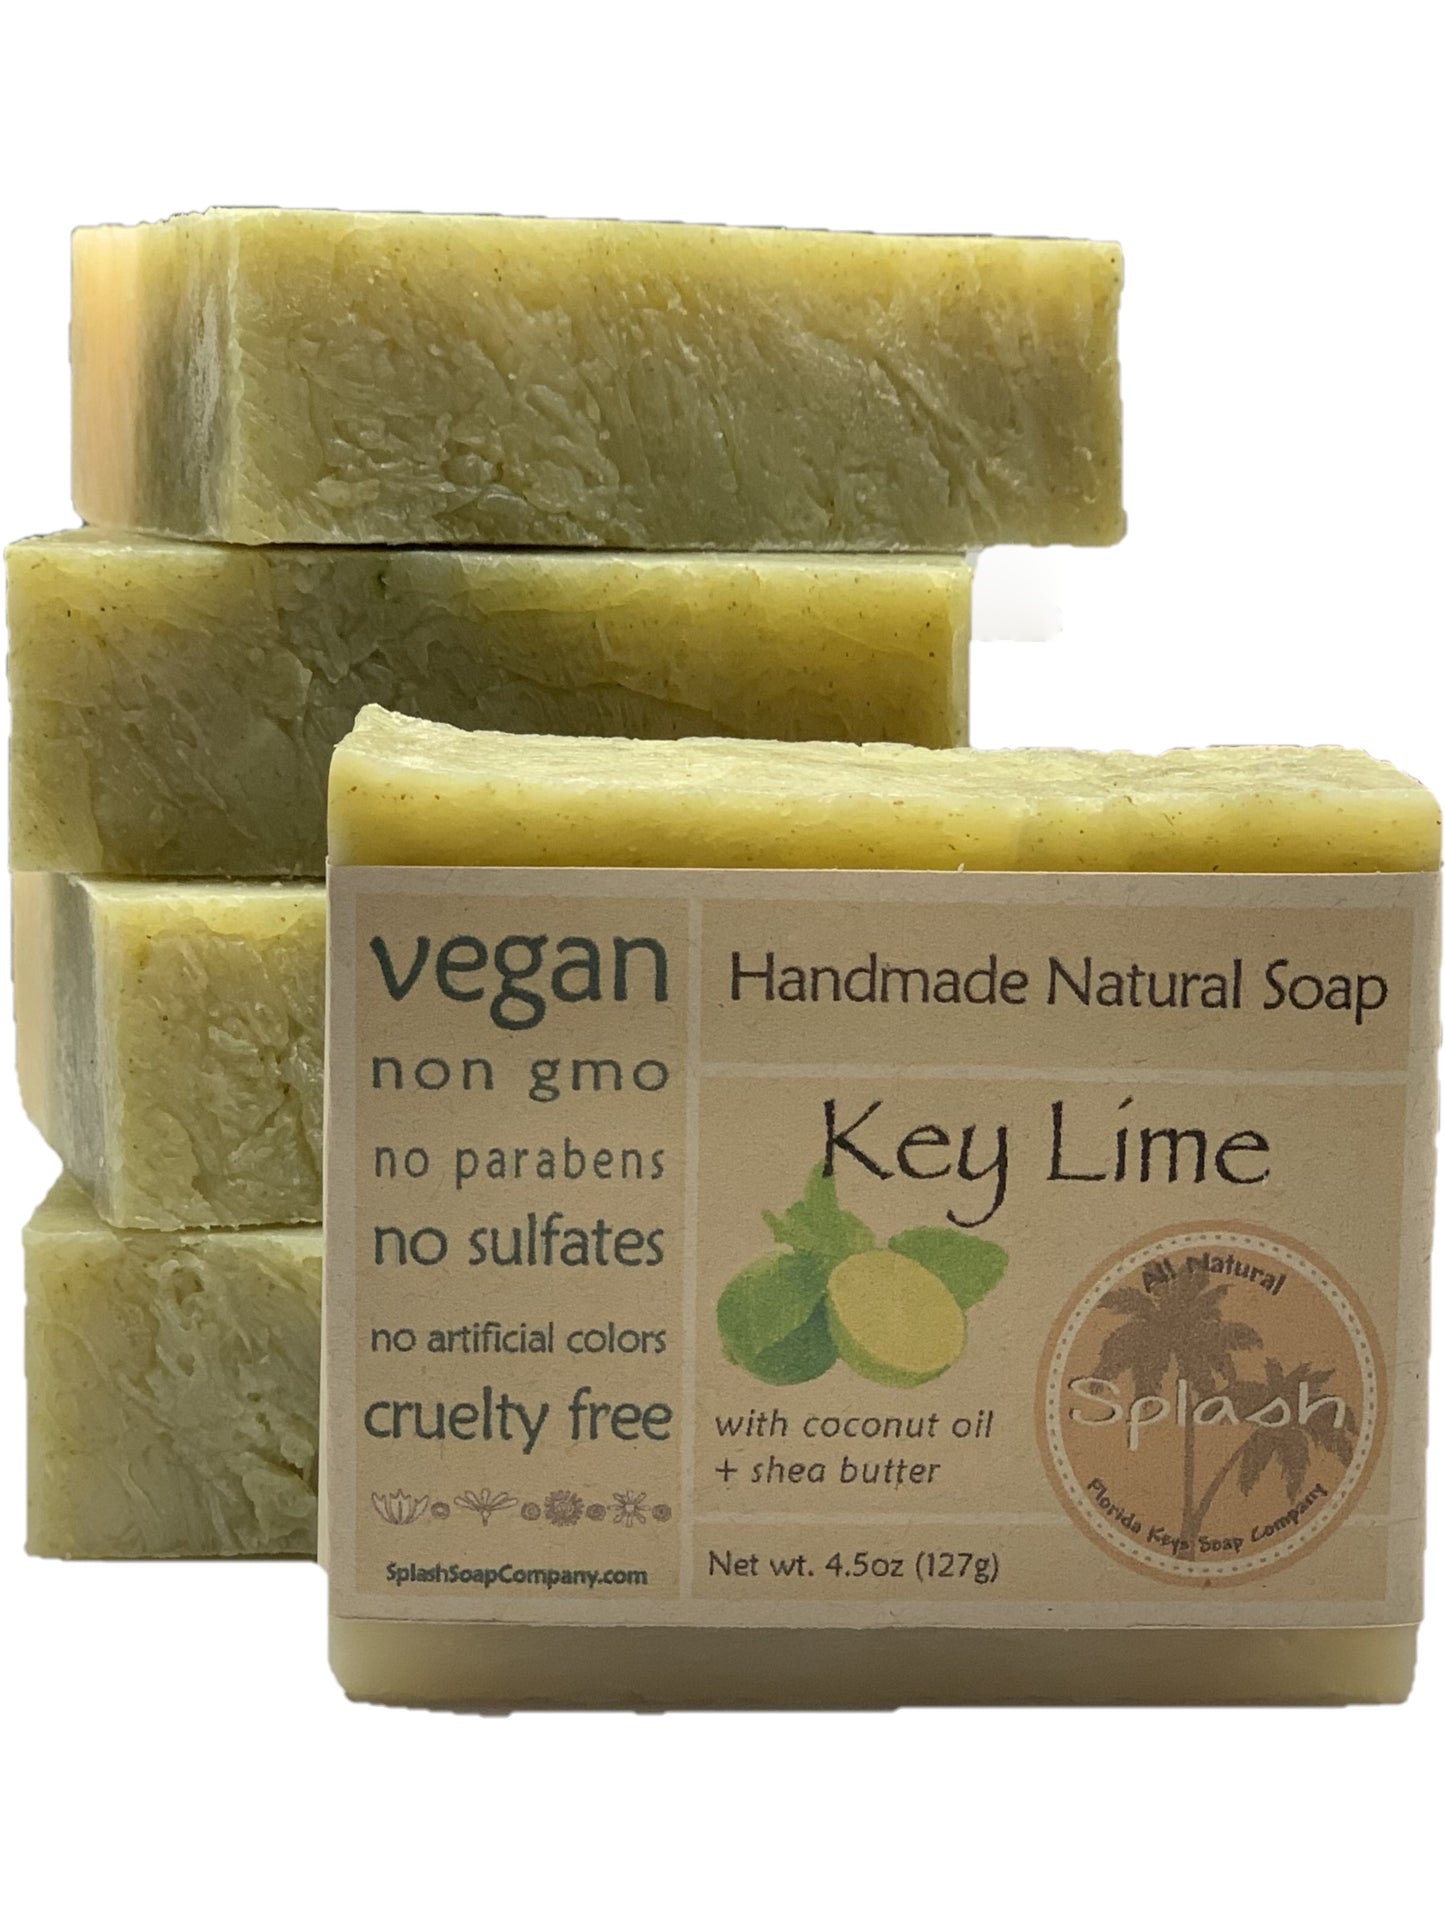 Key Lime - Splash Soap Company